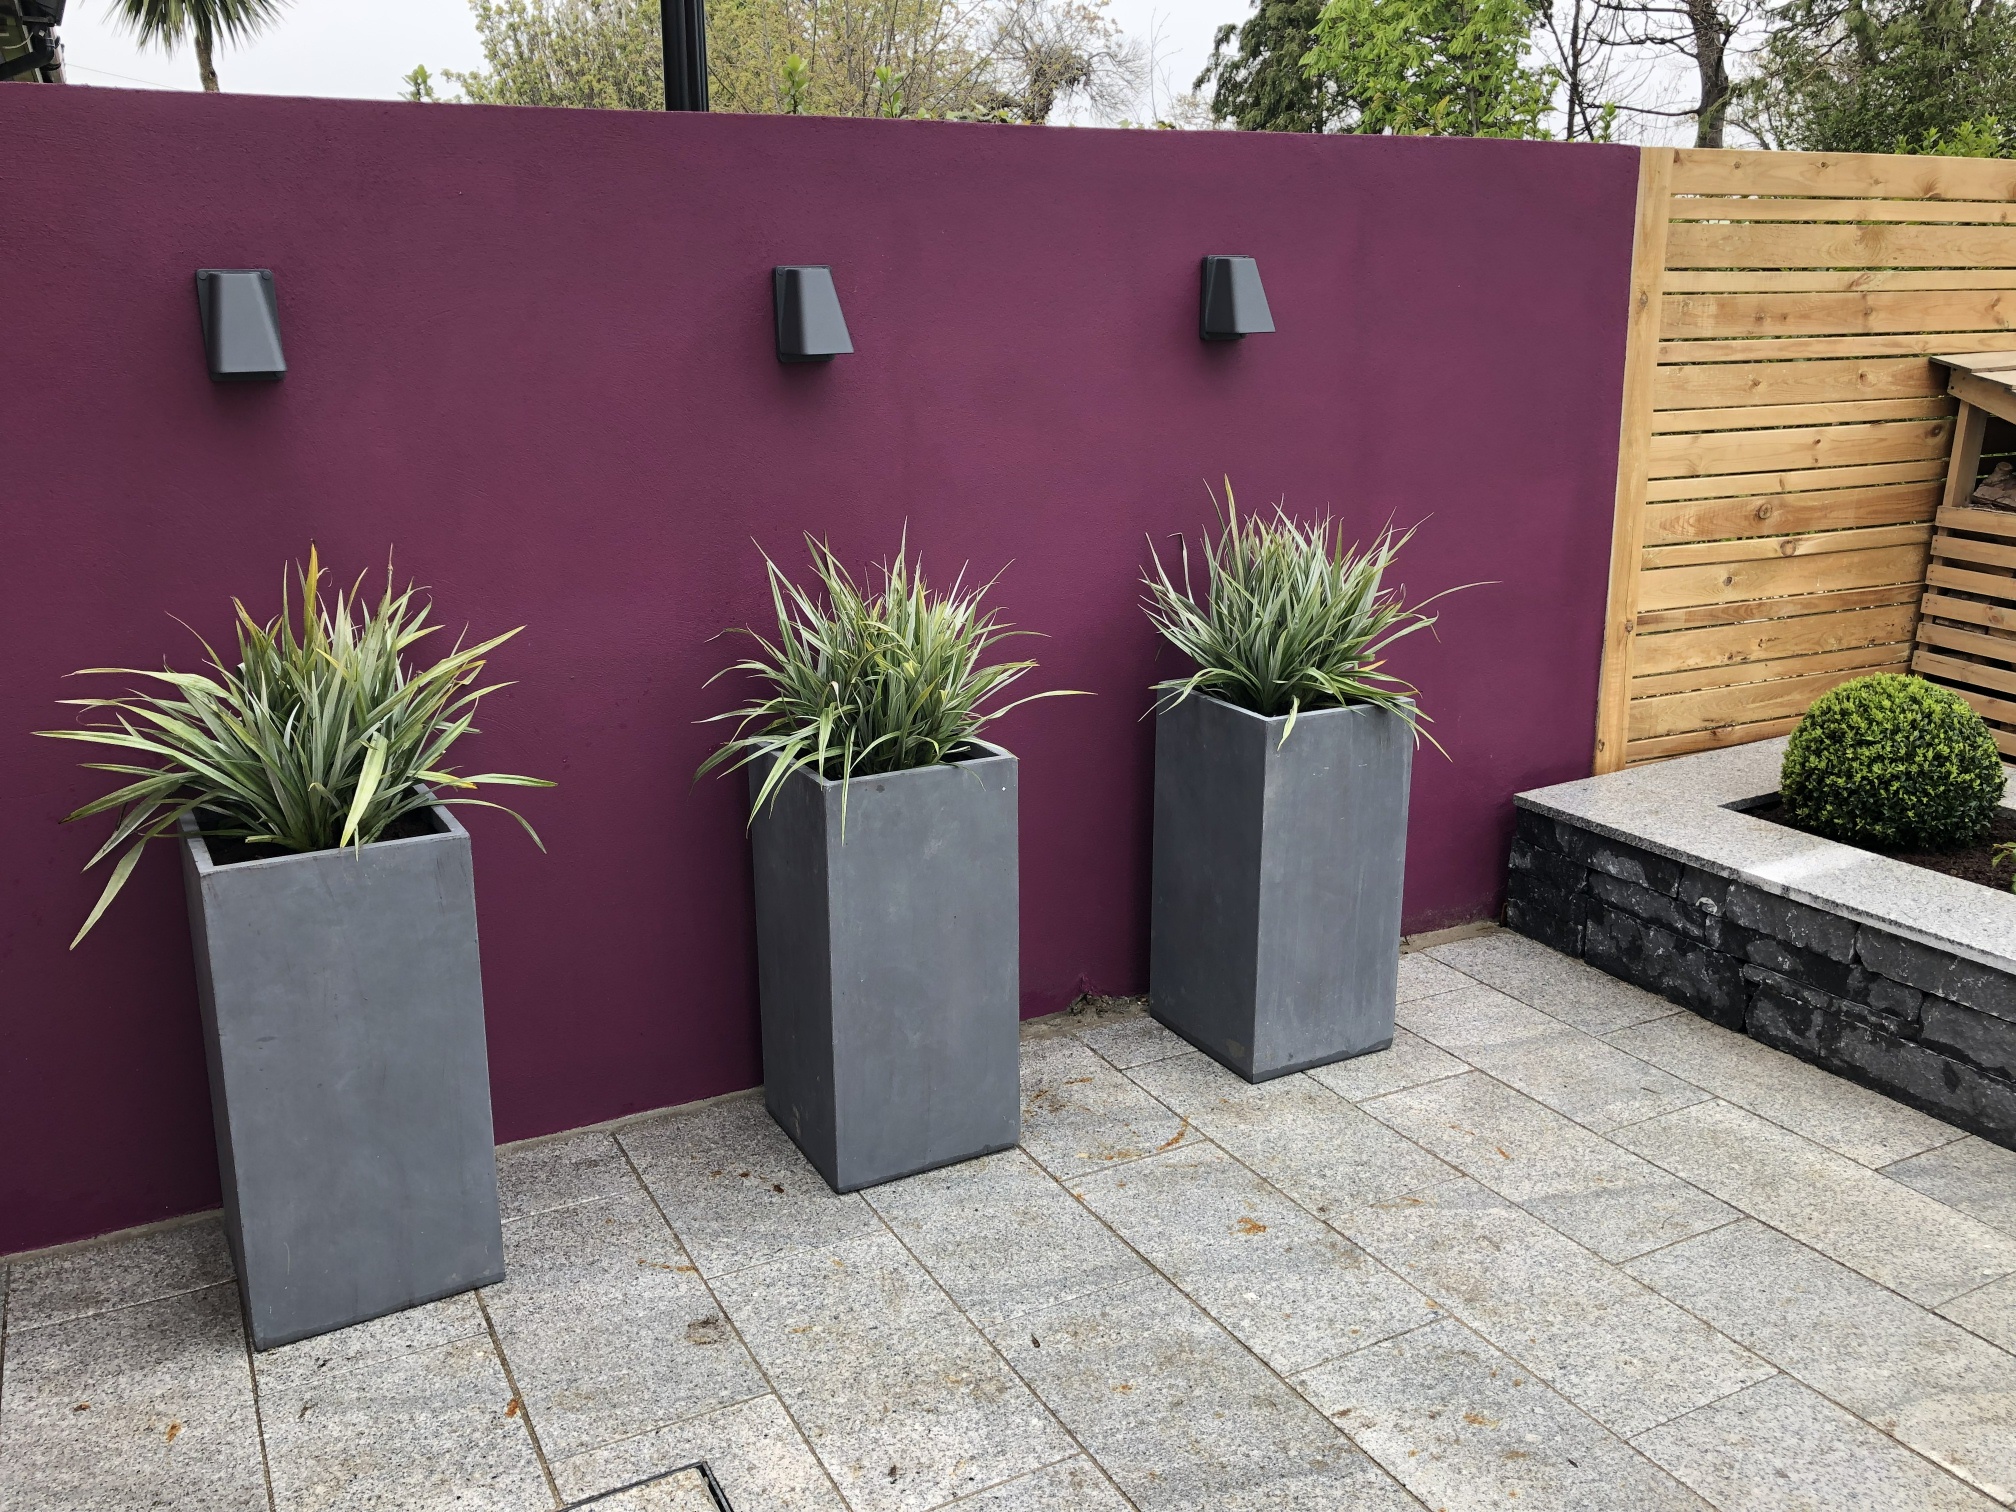 Three Garden Pots against an Aubergine Wall